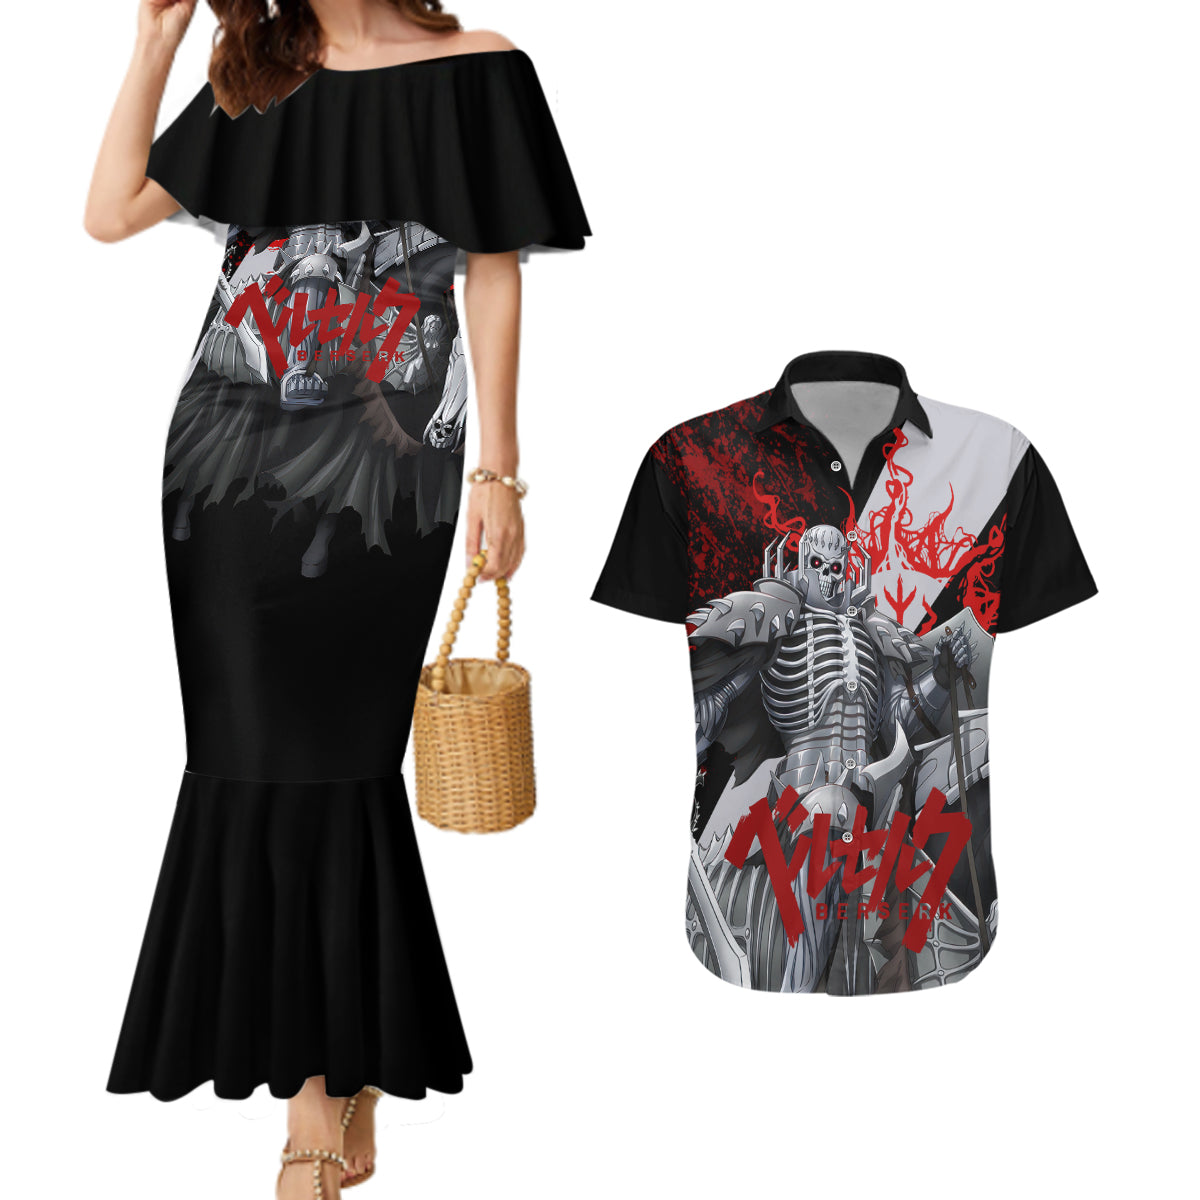 The Skull Knight Berserk Couples Matching Mermaid Dress and Hawaiian Shirt Black Blood Style